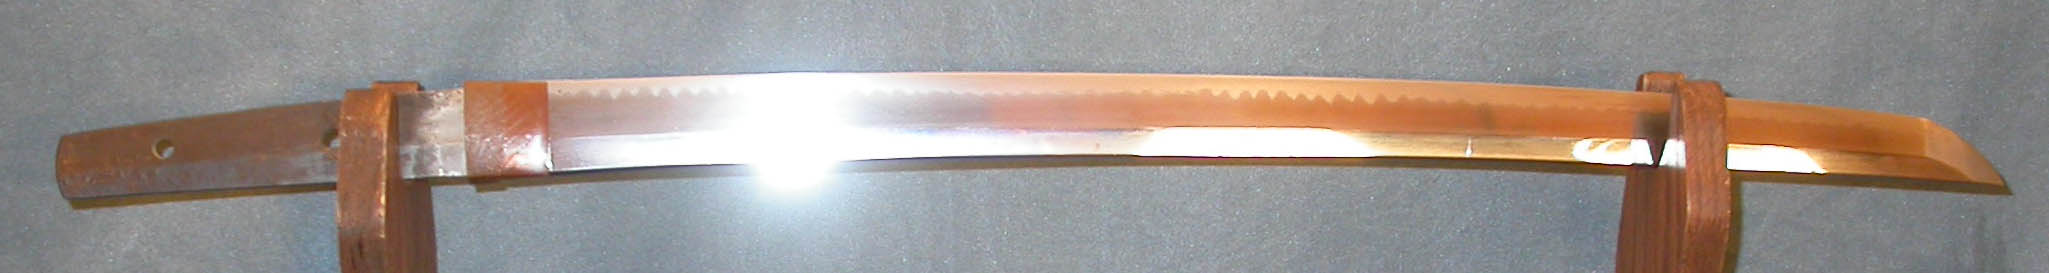 2001oct11B Hoshu blade